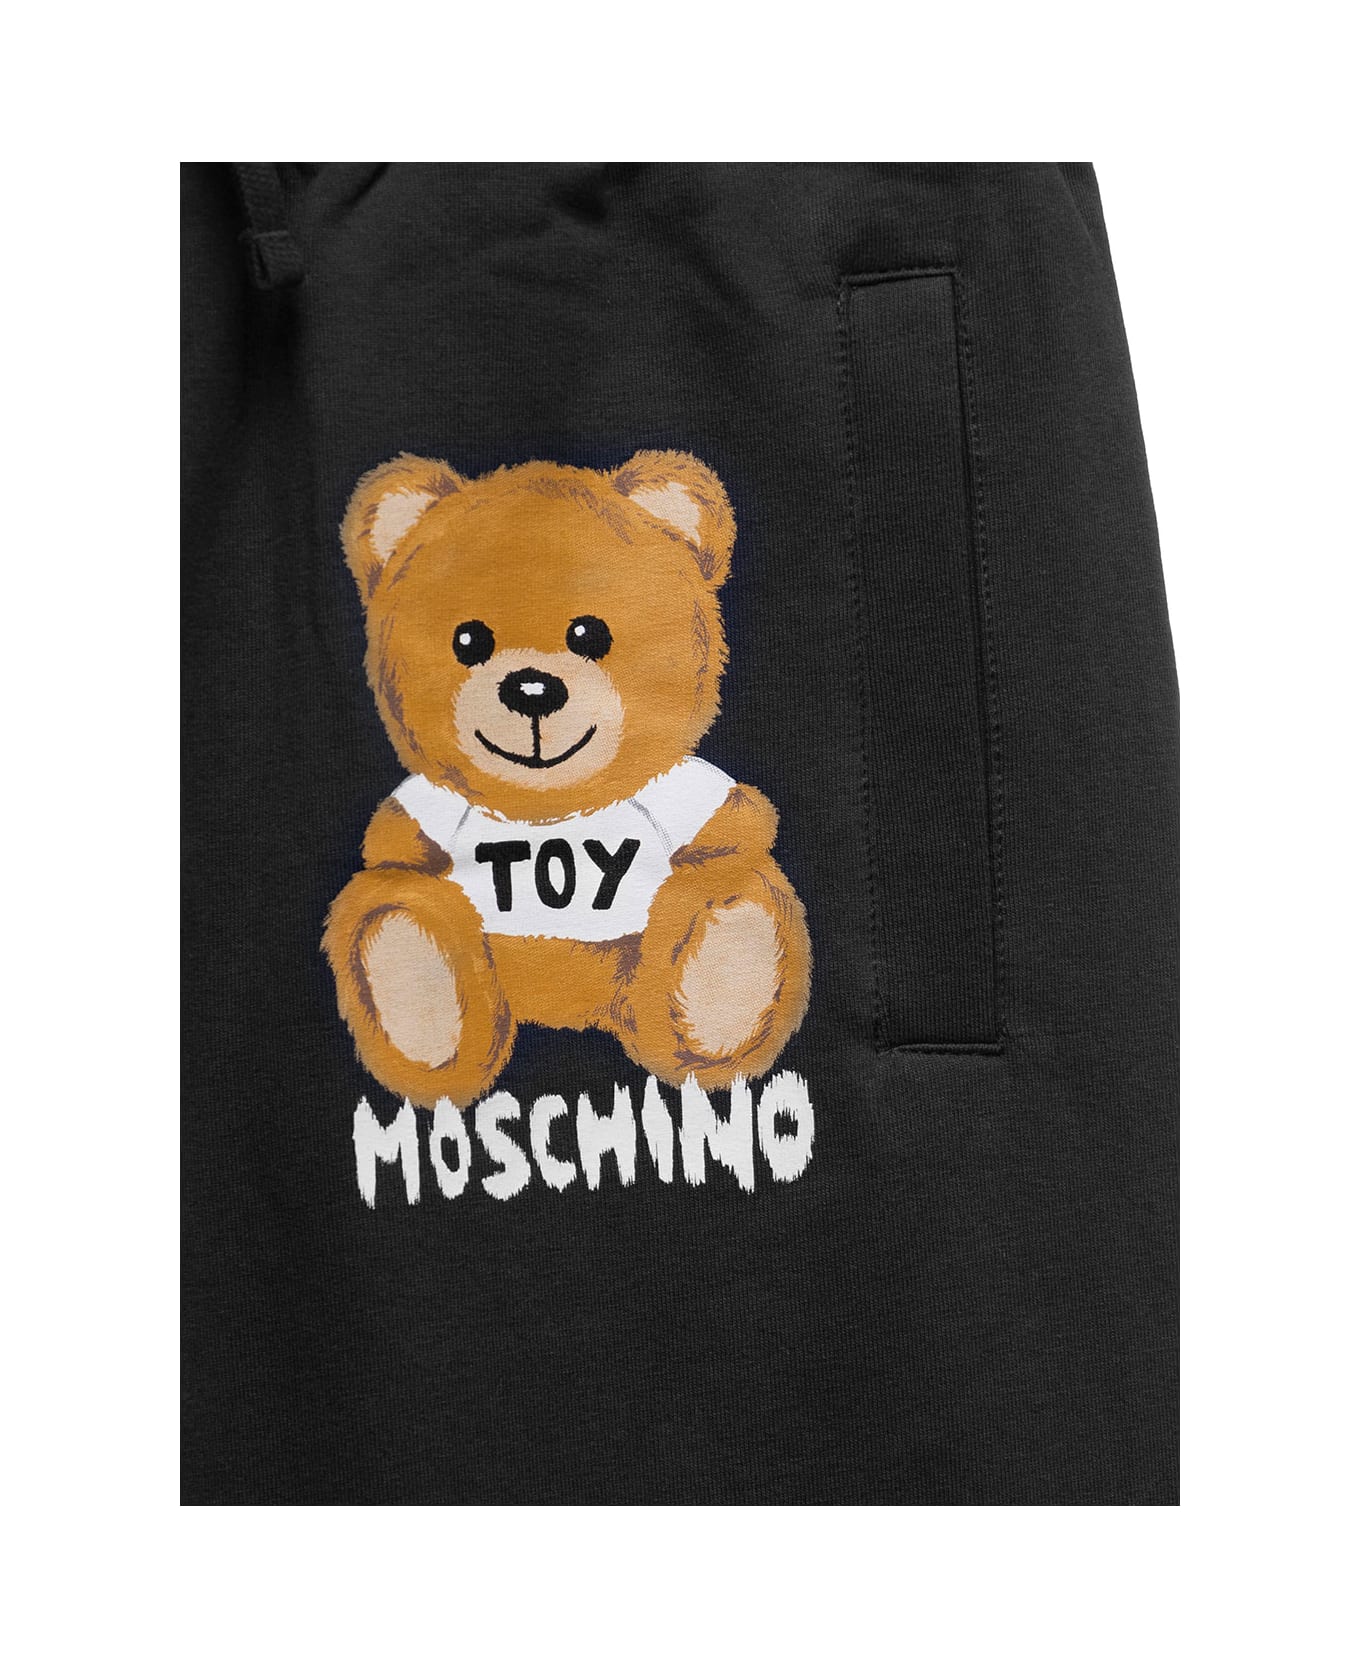 Moschino Black Cotton Jogger With Teddy Bear Print  Moschino Kids Boy - Black